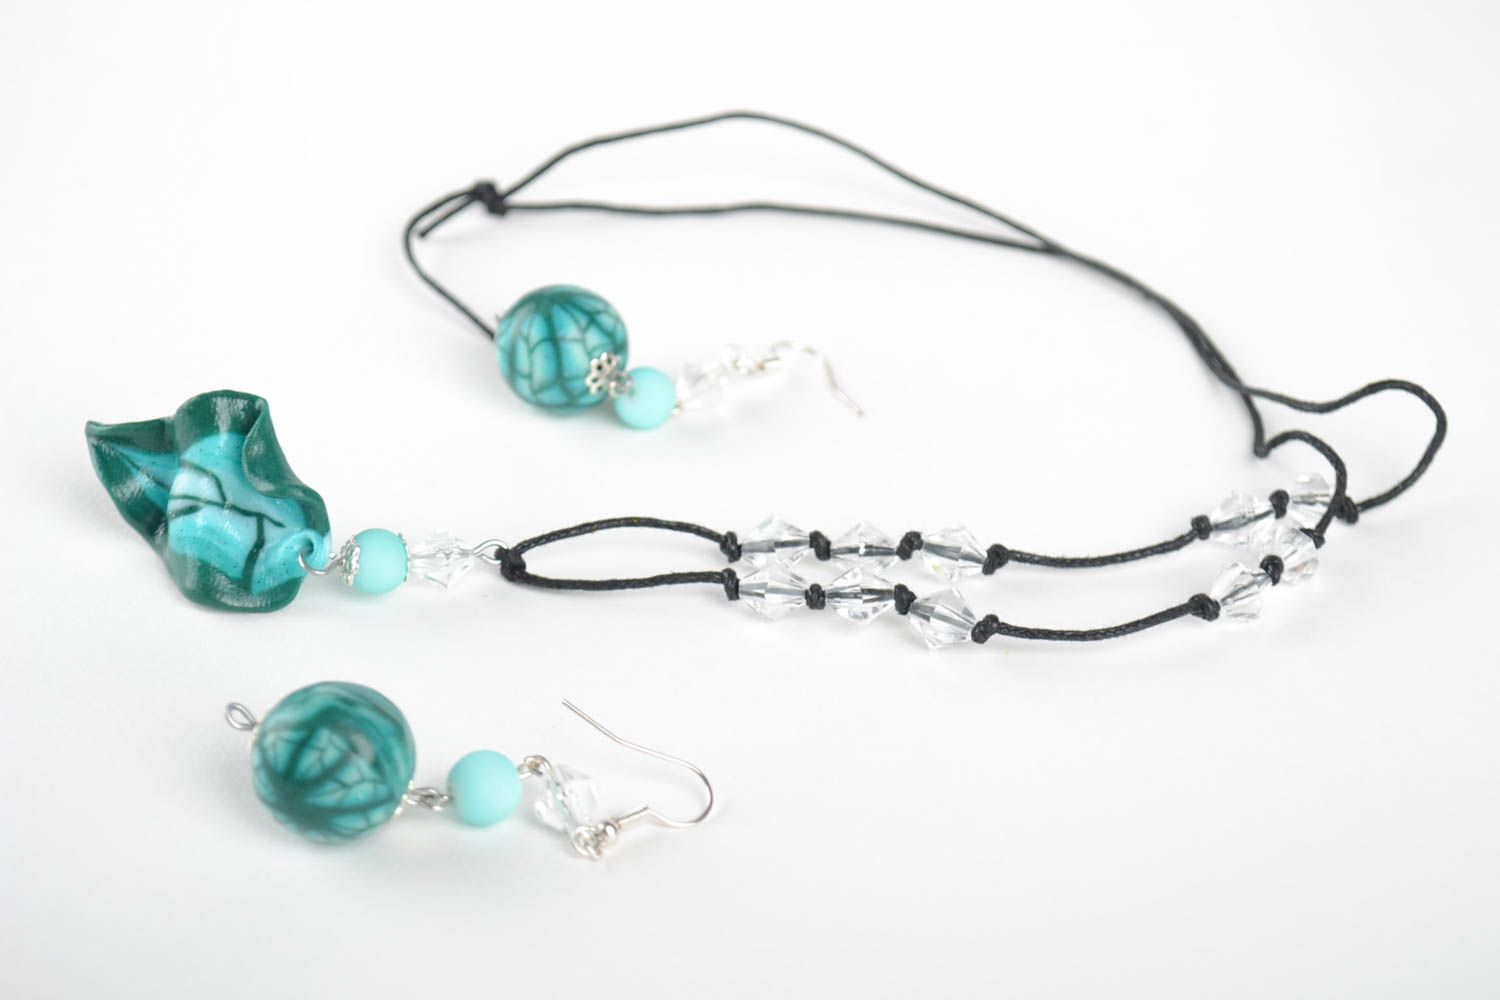 Handmade jewelry pendant necklace designer earrings jewelry set polymer clay photo 2